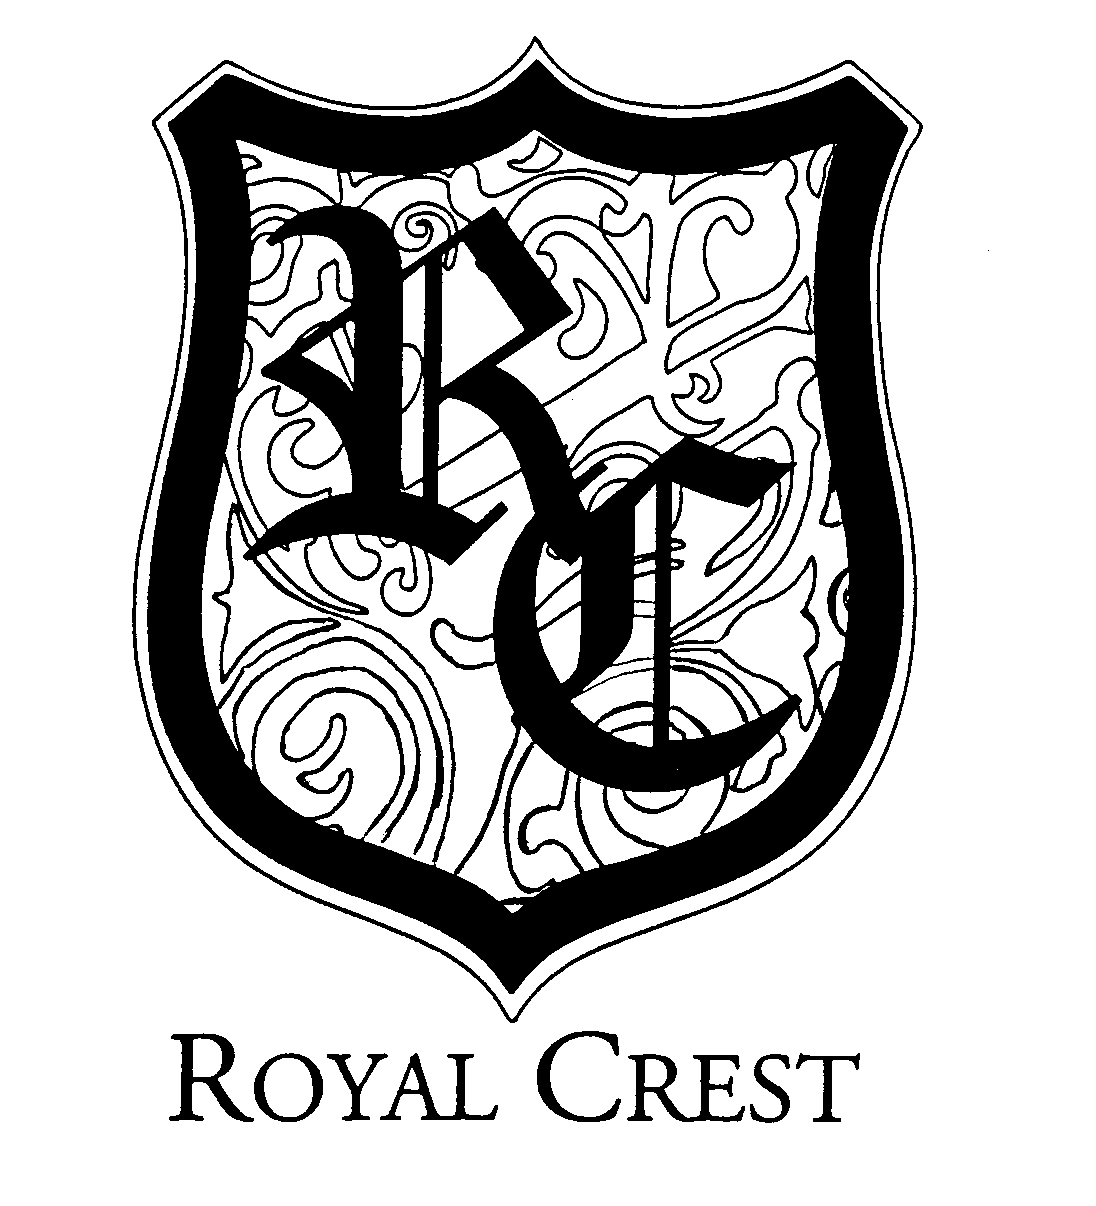  RC ROYAL CREST